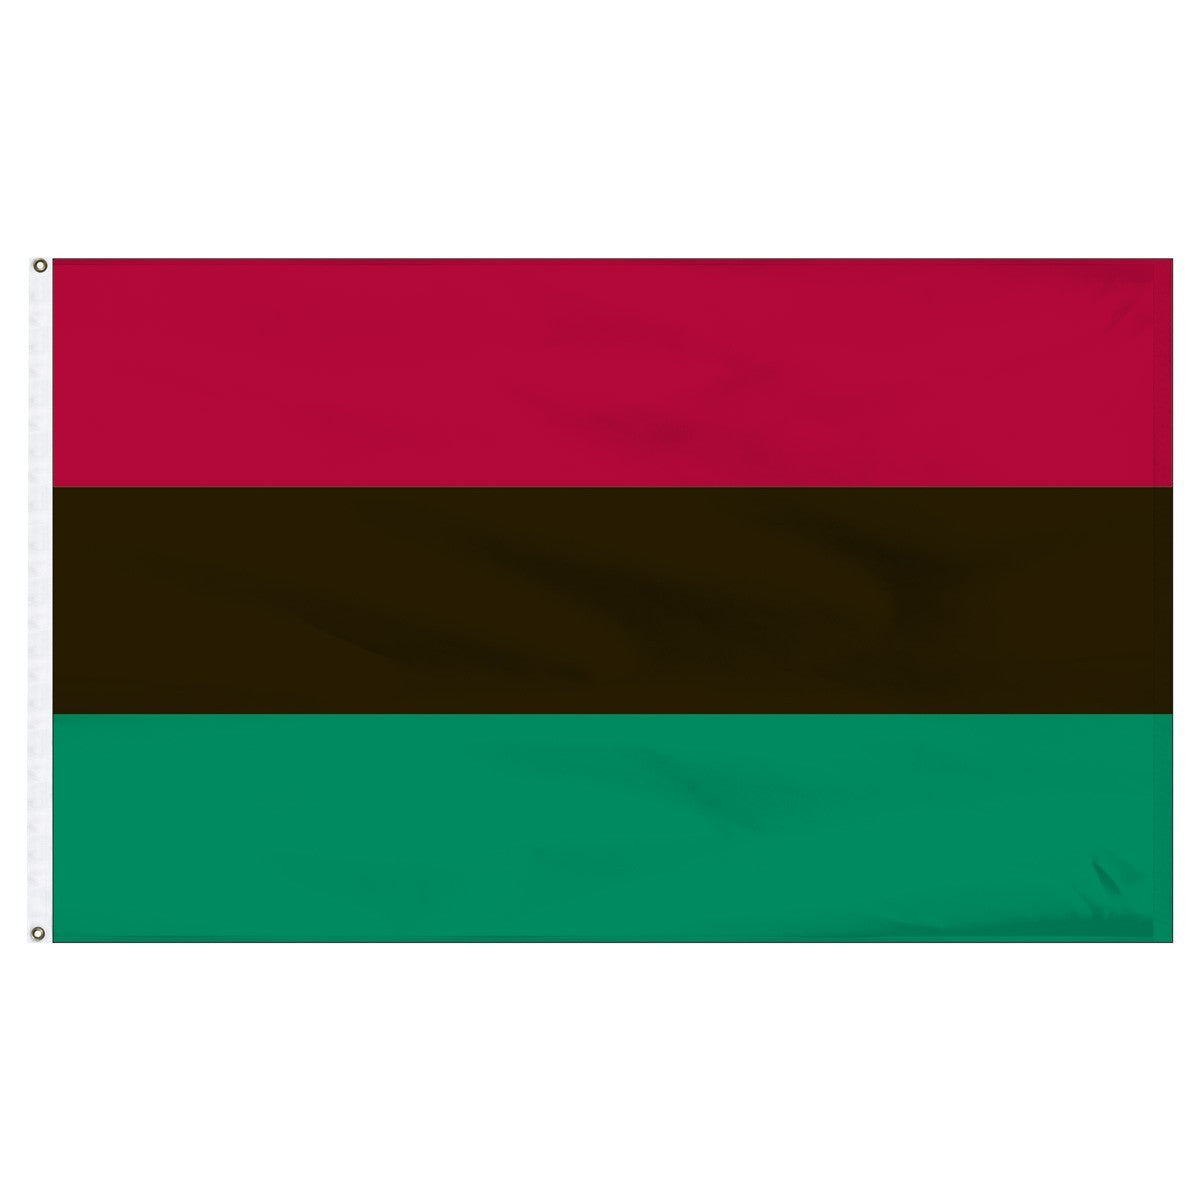 Afrio-American - African American 4' x 6' Outdoor Nylon Flag